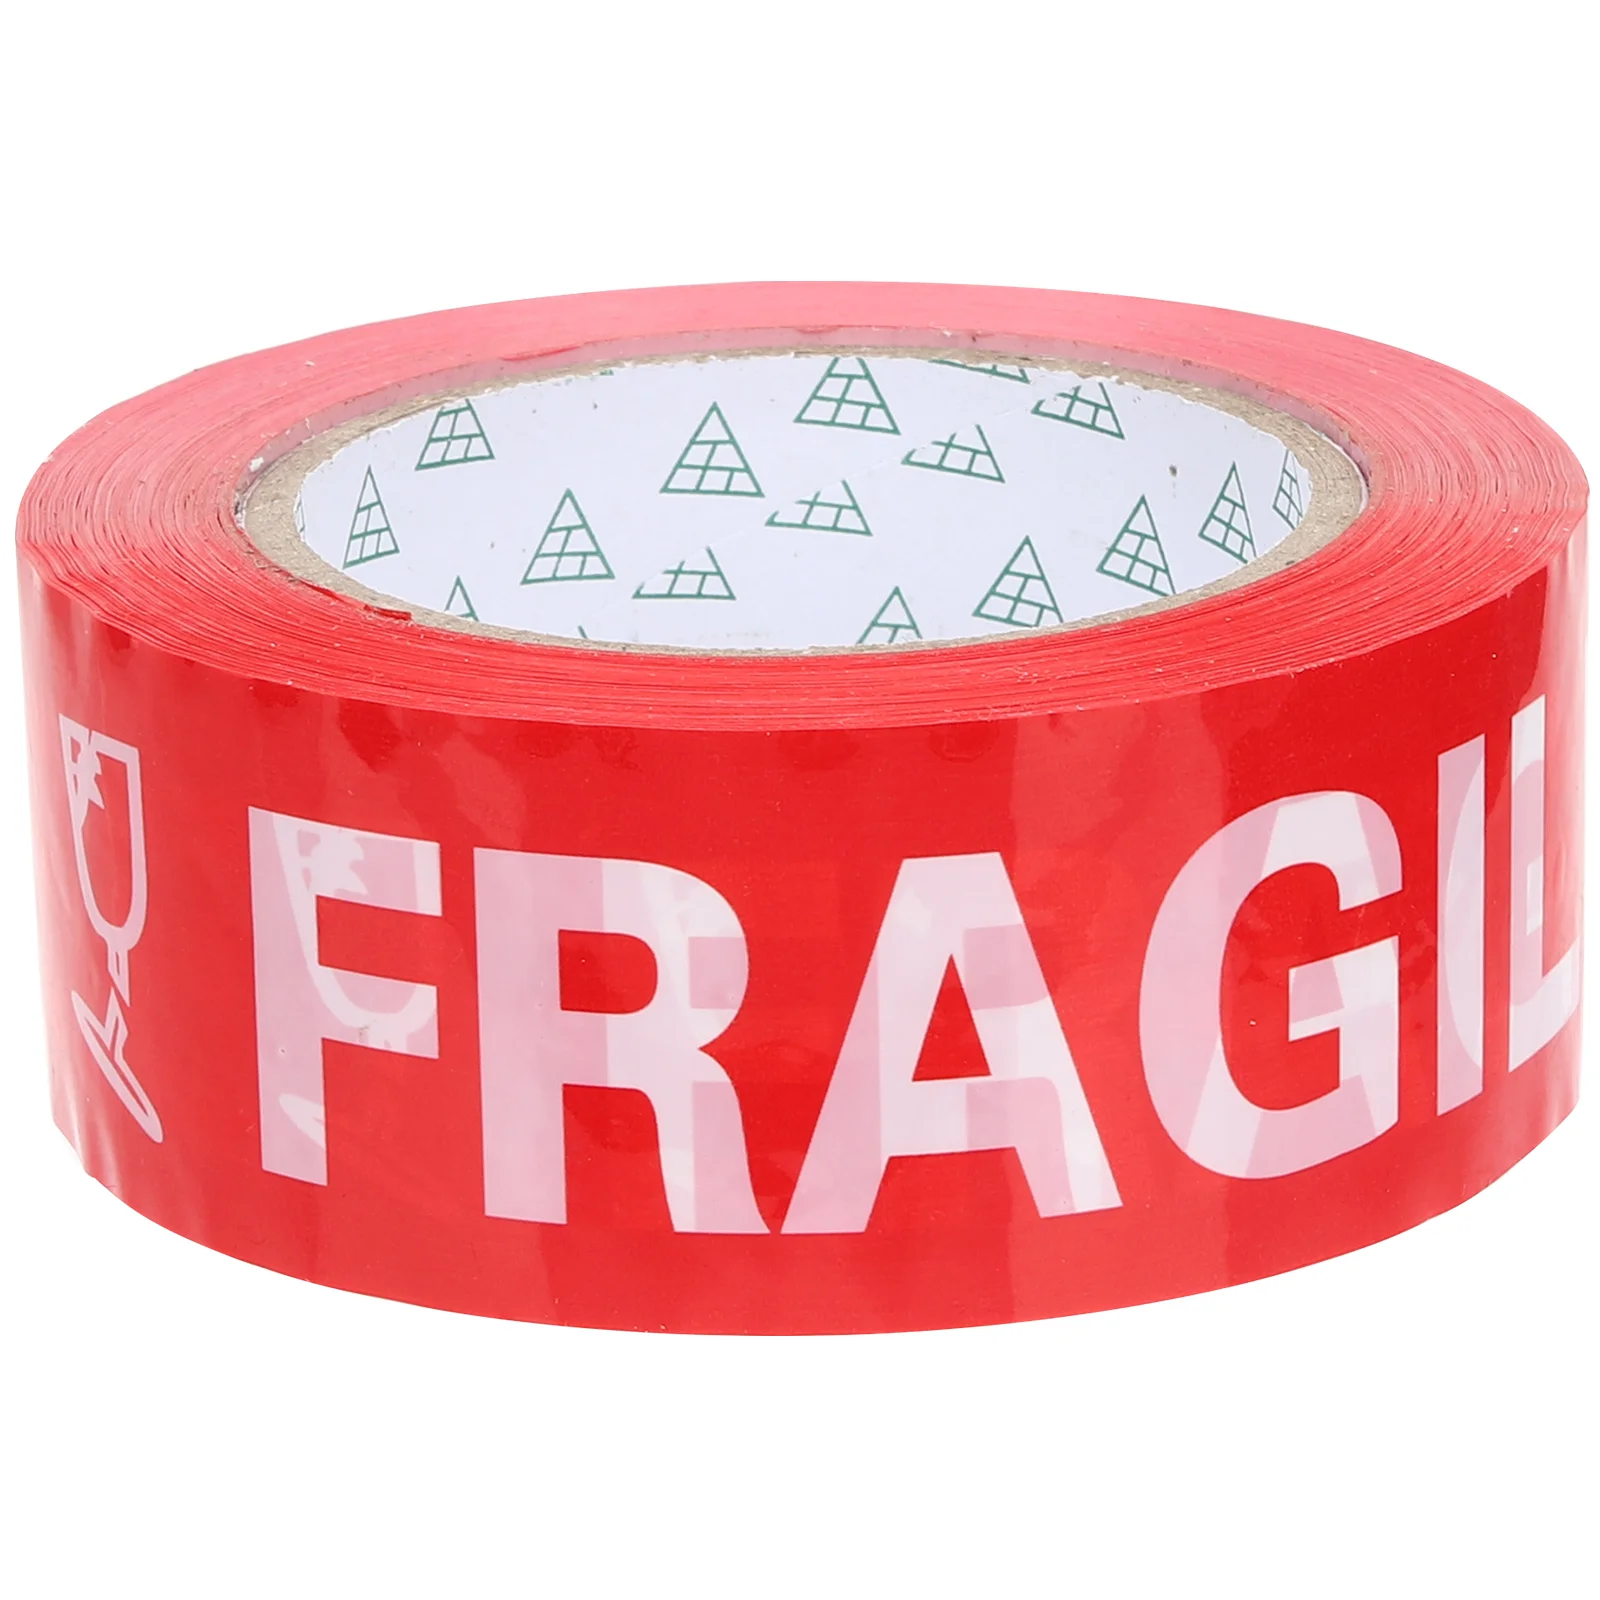 

Fragile Warning Tape Packing Nursing Stuff Moving Box Adhesive Tapes Labels Weather Sealing Shipping Stickers